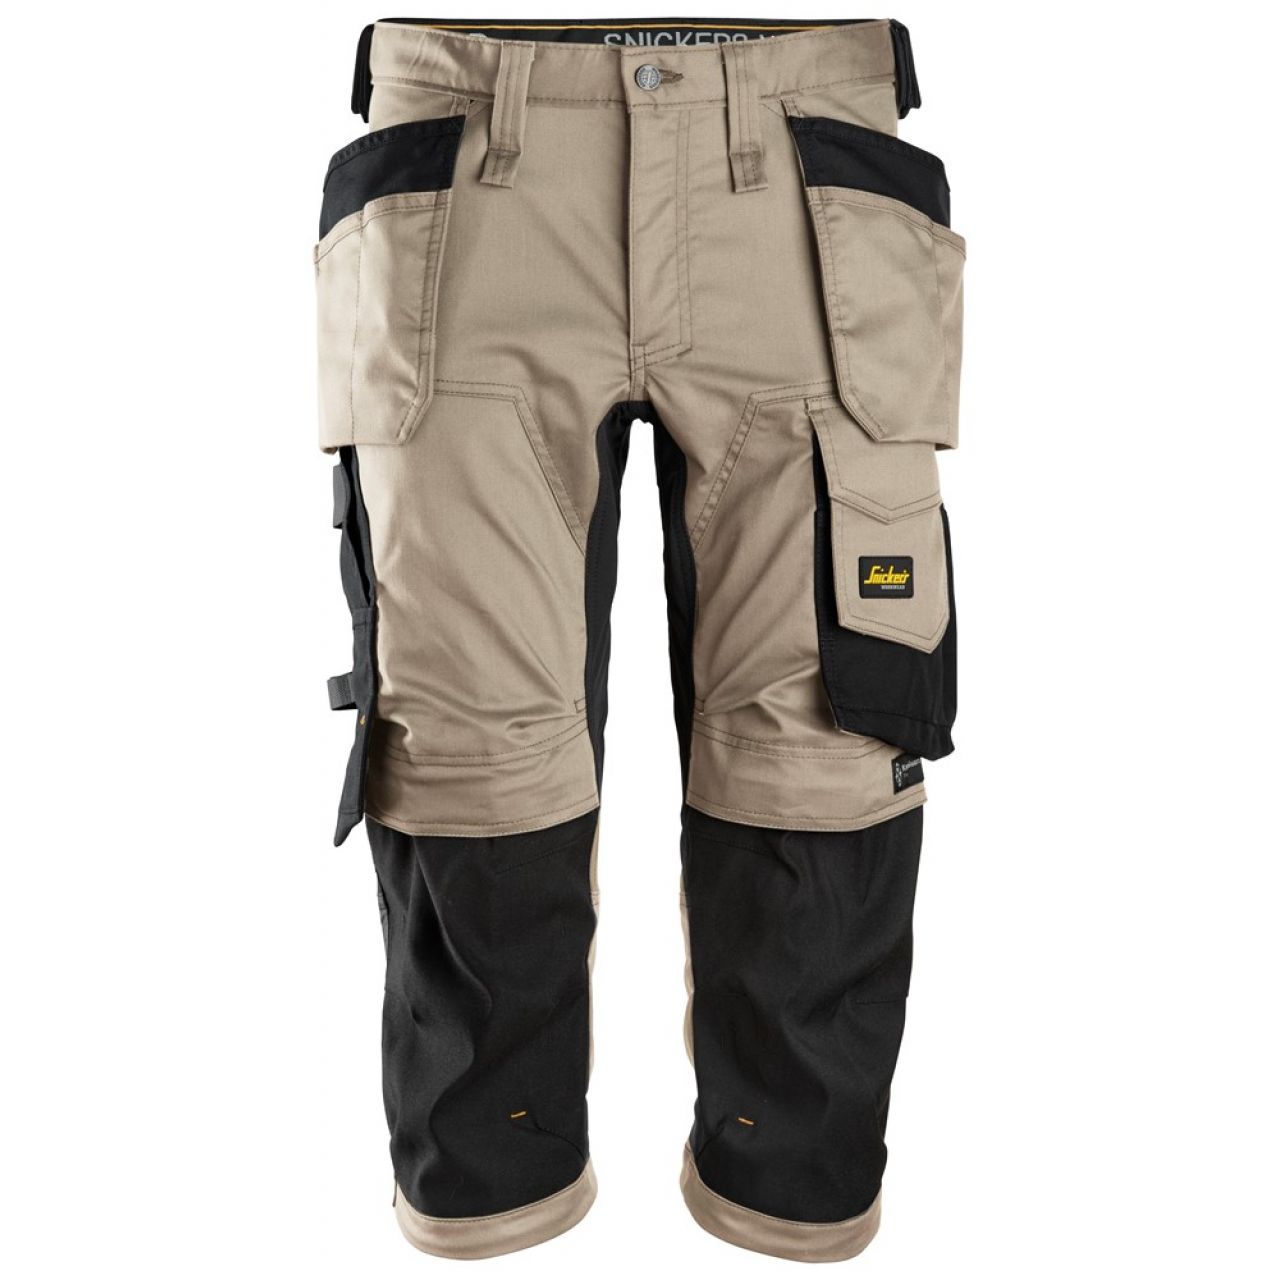 6142 Pantalones pirata de trabajo elasticos con bolsillos flotantes AllroundWork beige-negro talla 46